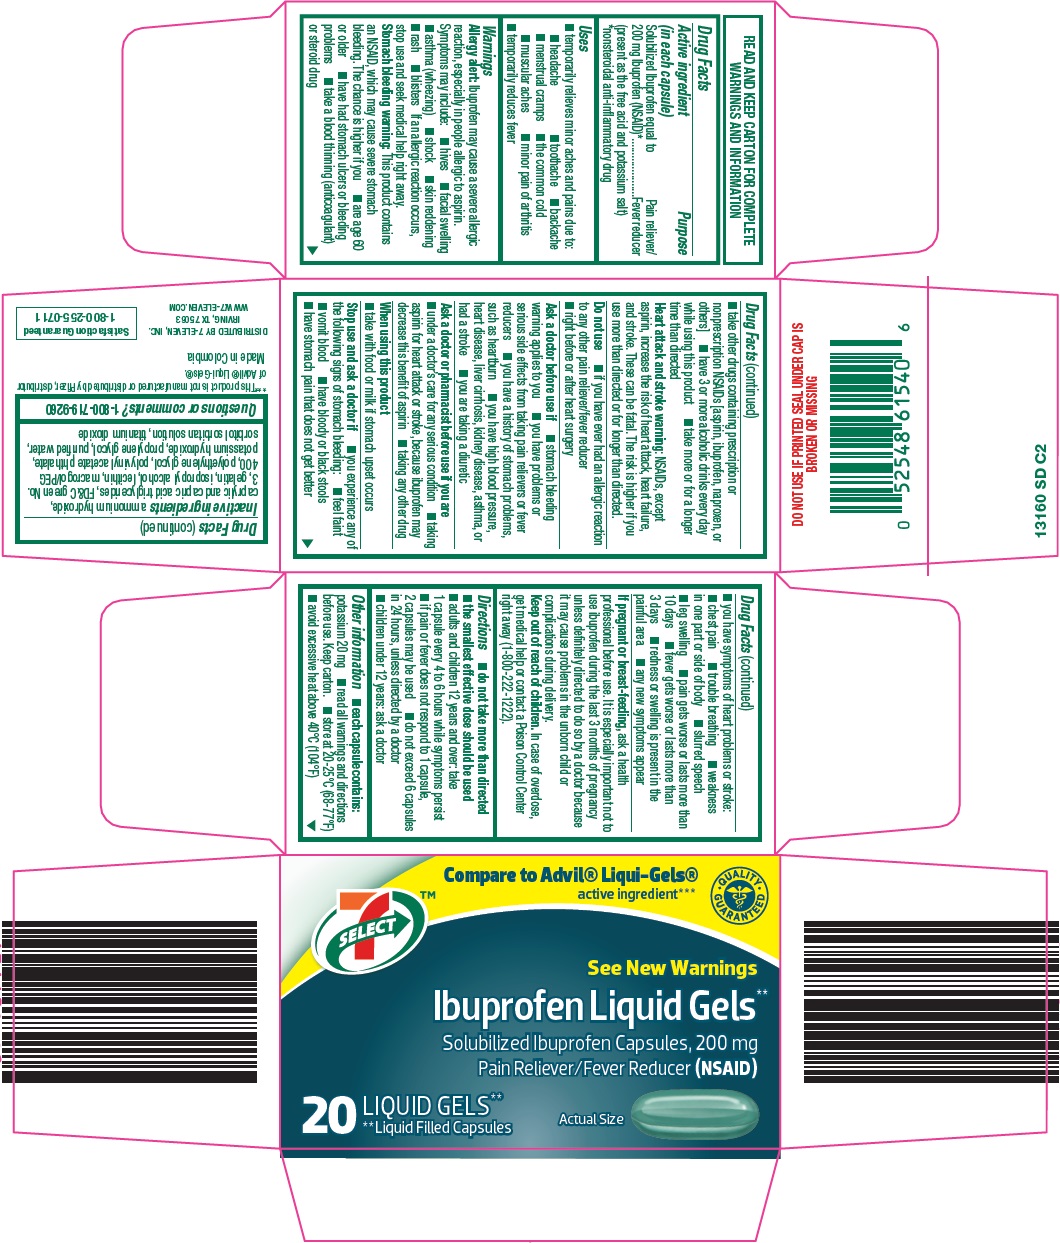 131-sd-ibuprofen-liquid-gels.jpg